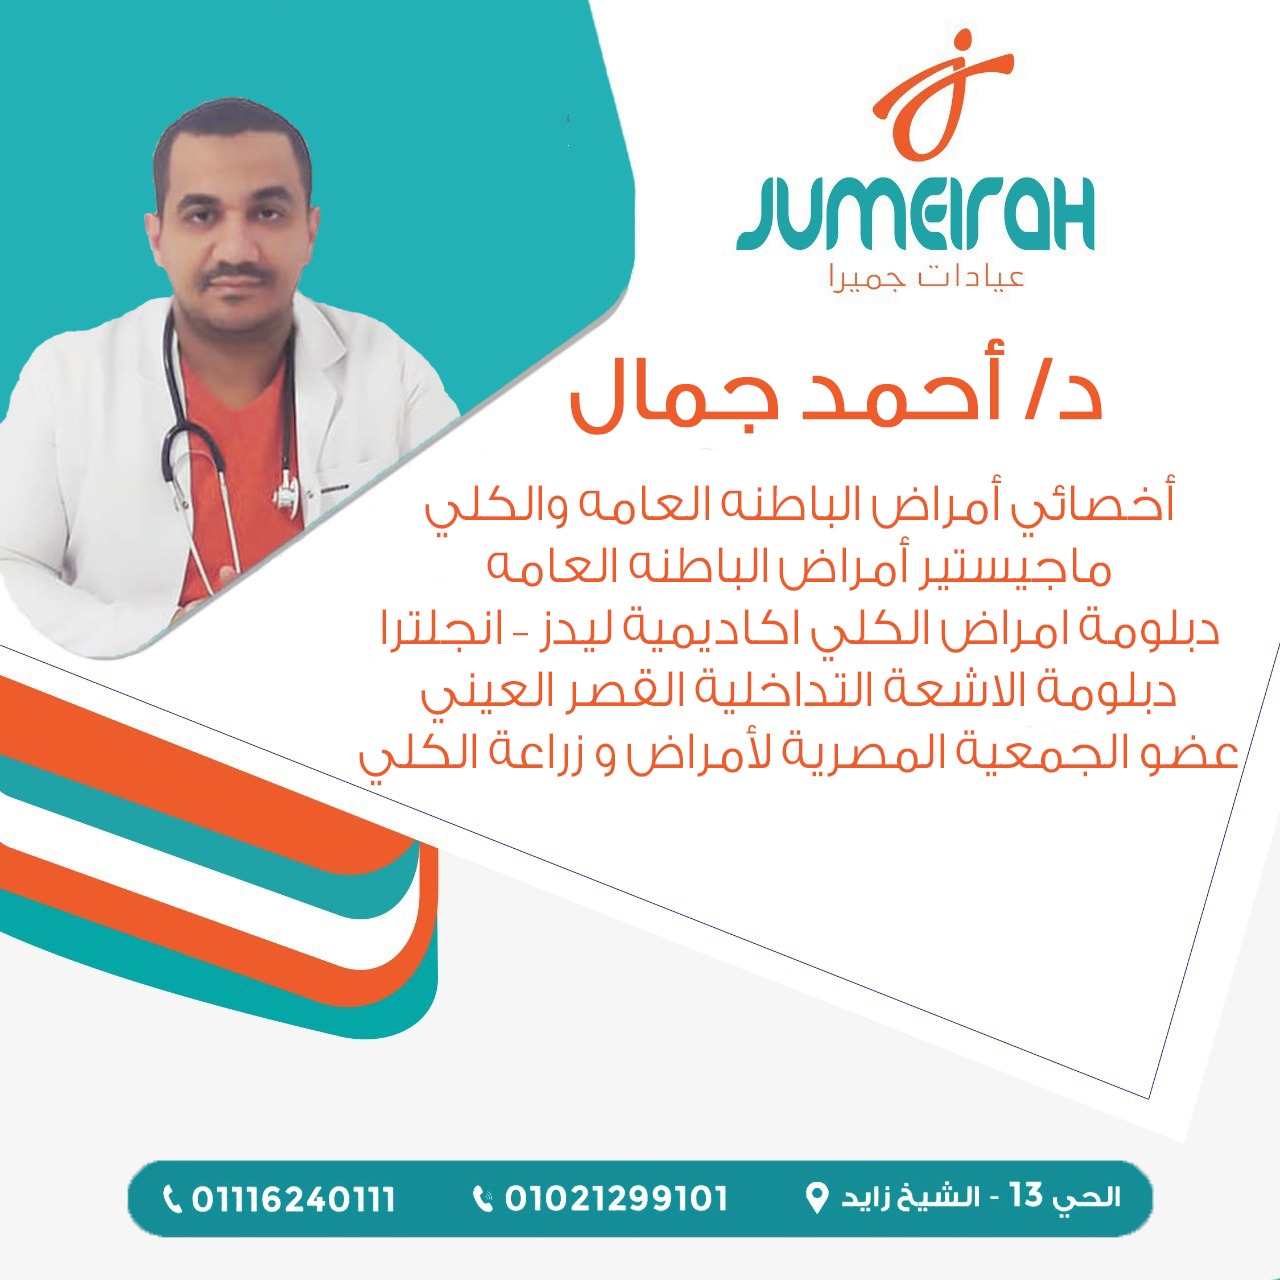 Dr. Ahmed Gamal